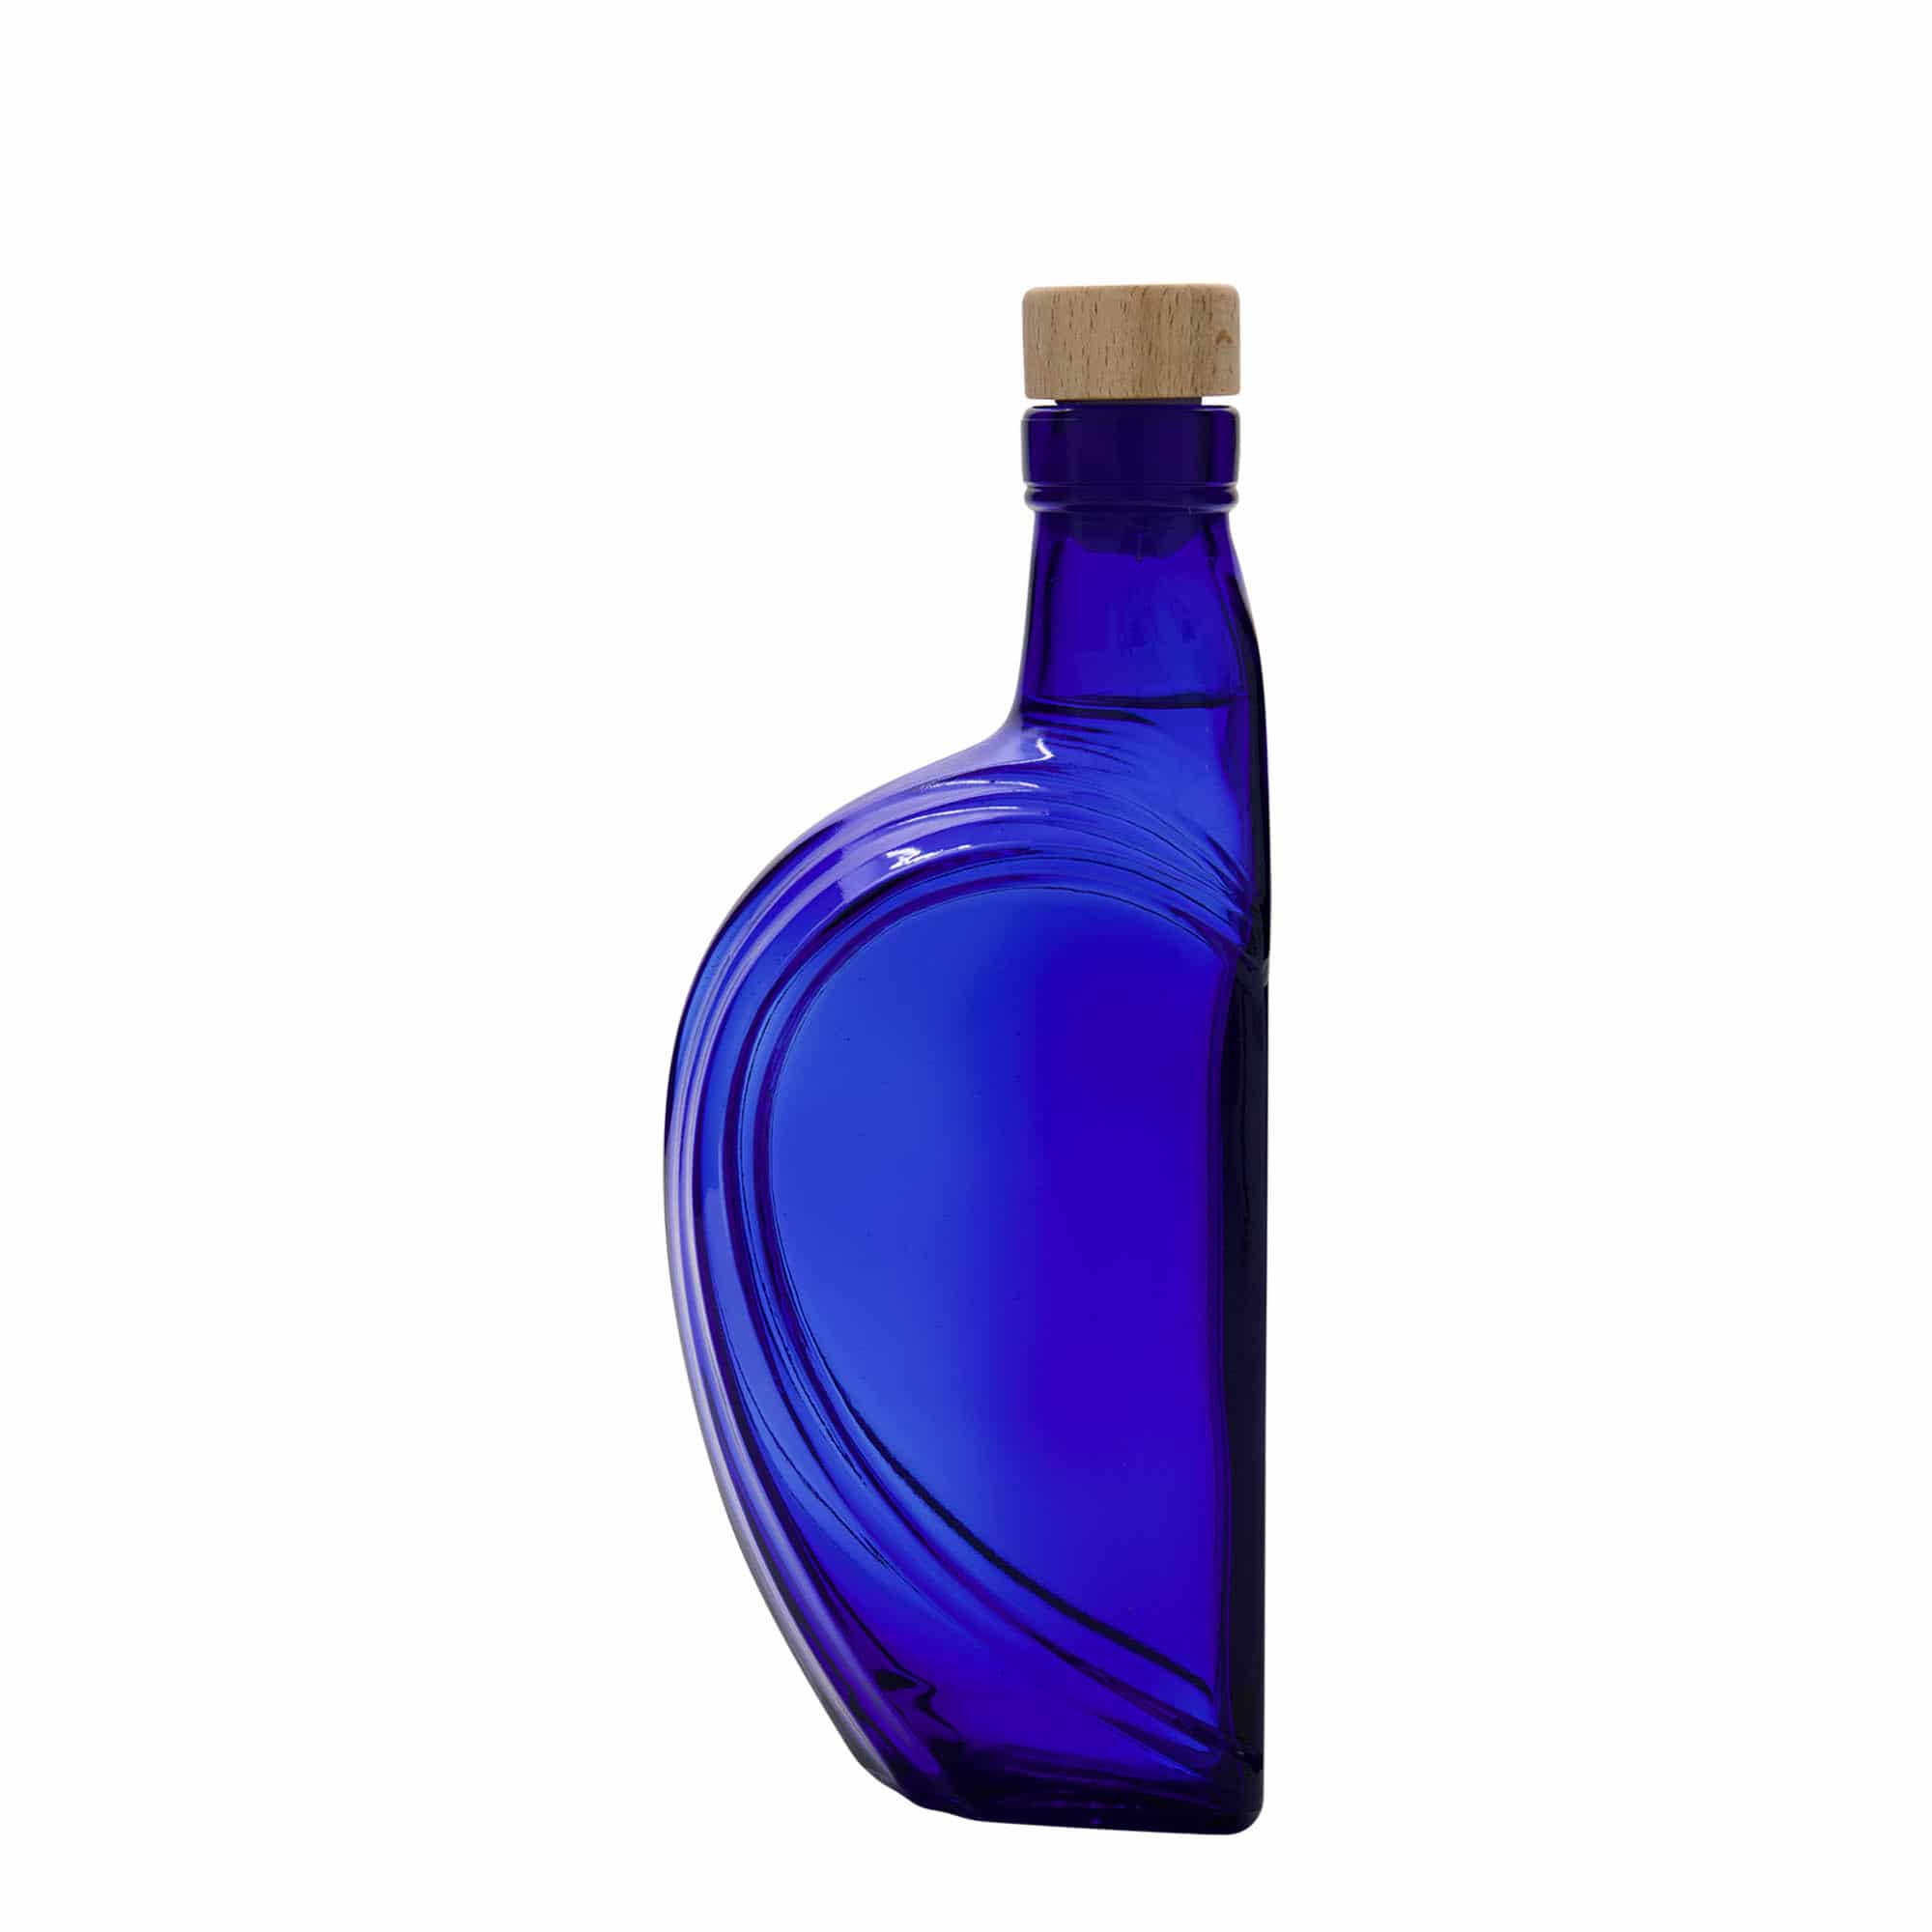 375 ml glass bottle 'Sweethearts', rectangular, royal blue, closure: cork